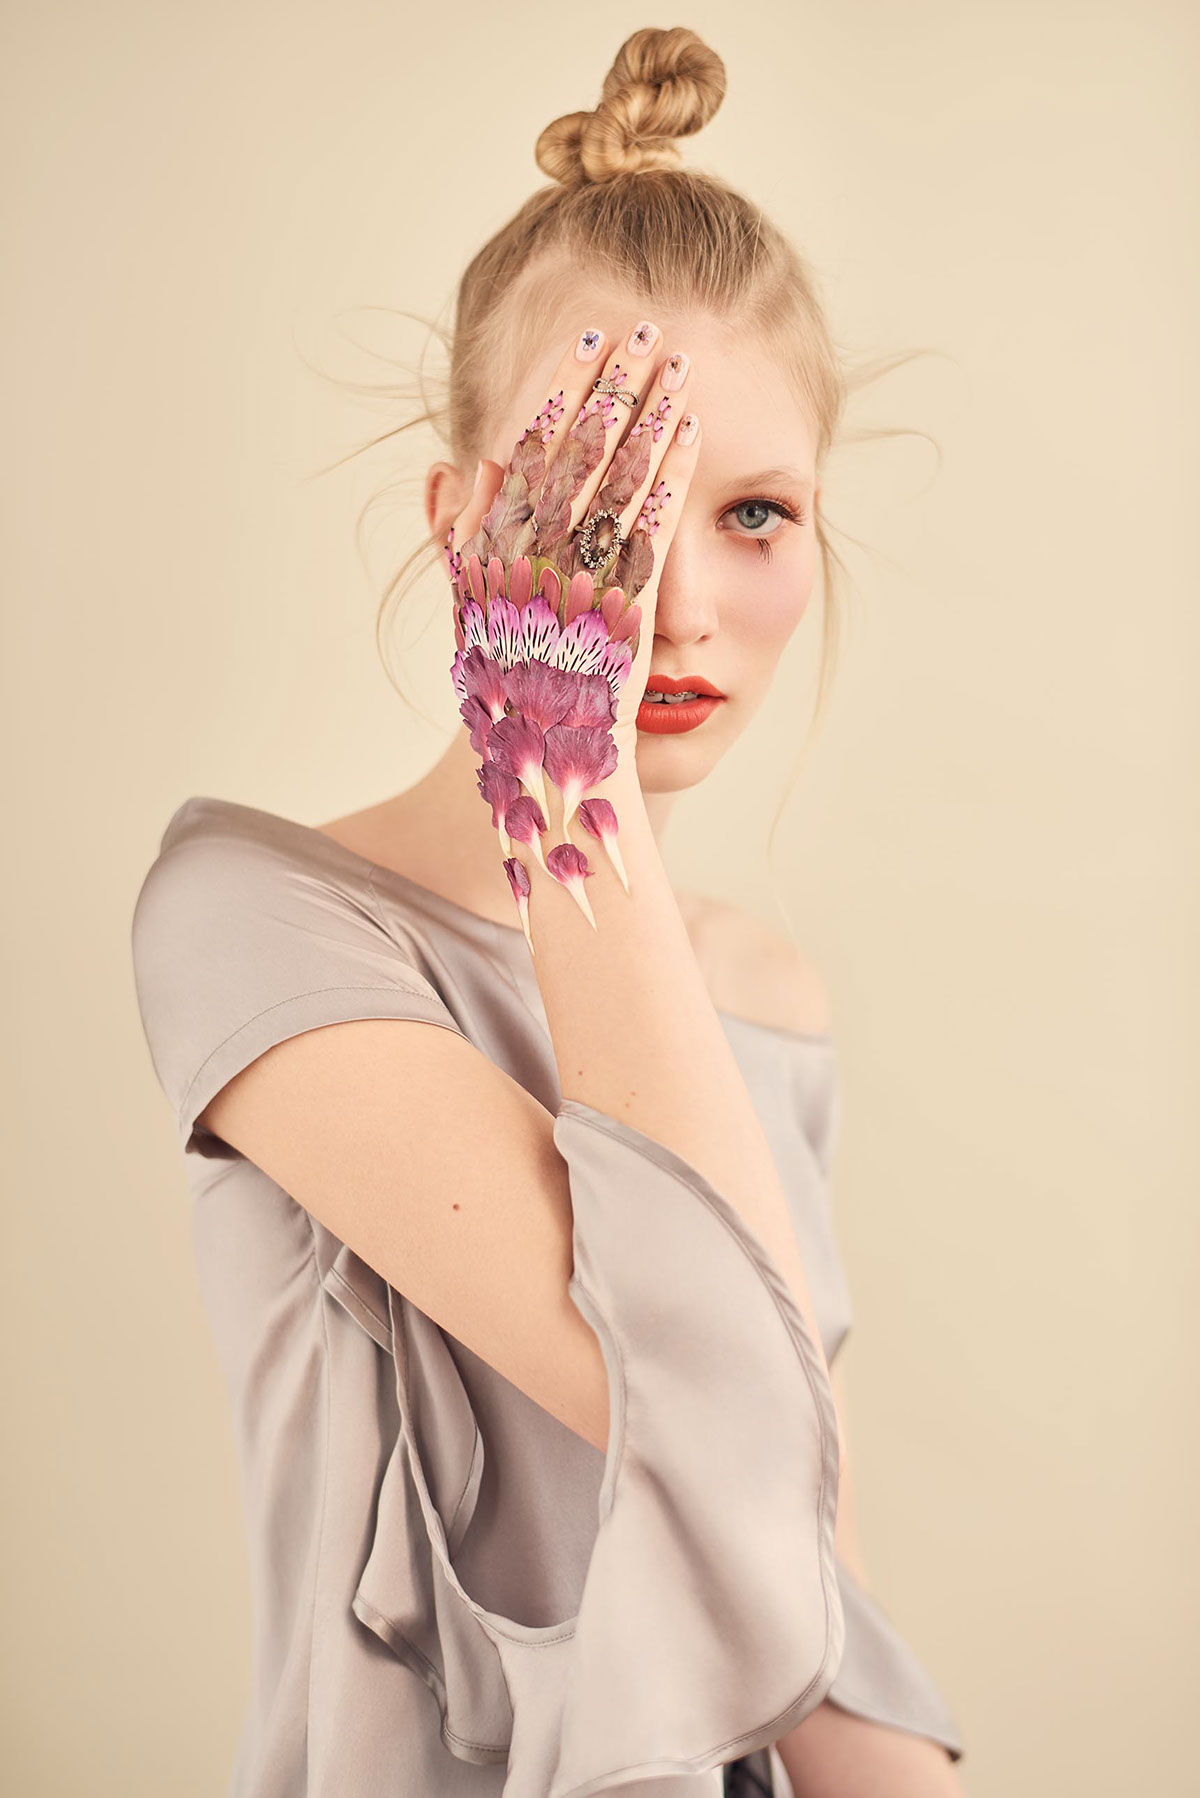 Model Girl Beauty Posing Hand Near Stock Photo 1152611225 | Shutterstock